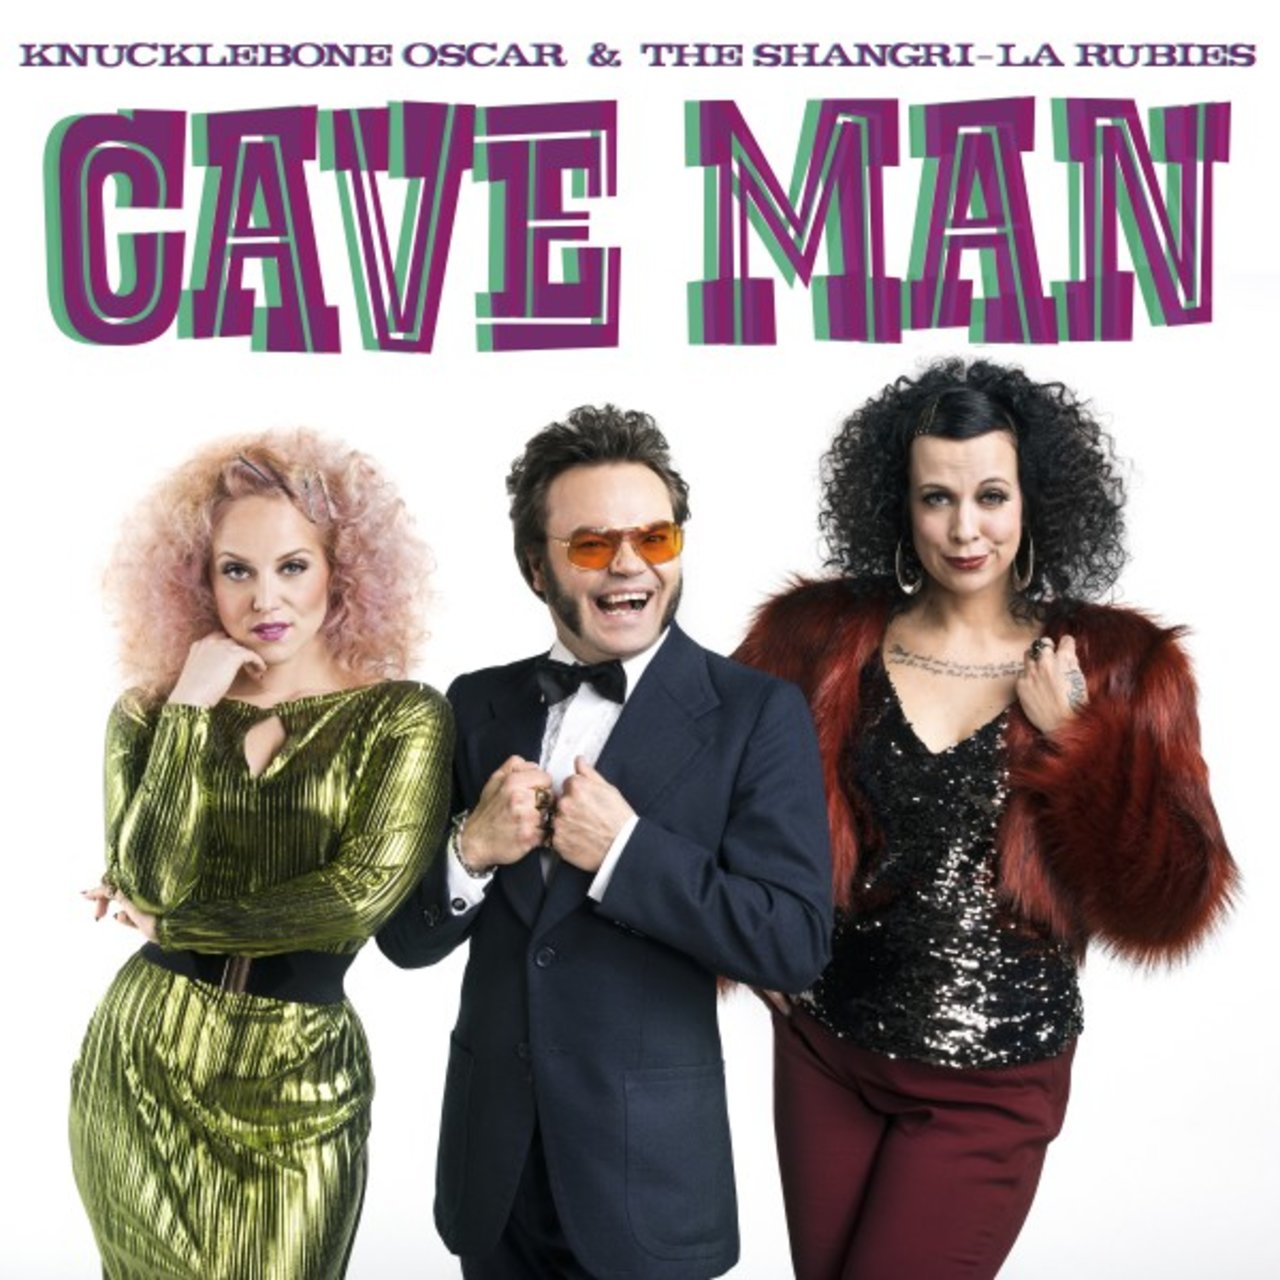 Knucklebone Oscar & The Shangri-La Rubies Caveman cover artwork